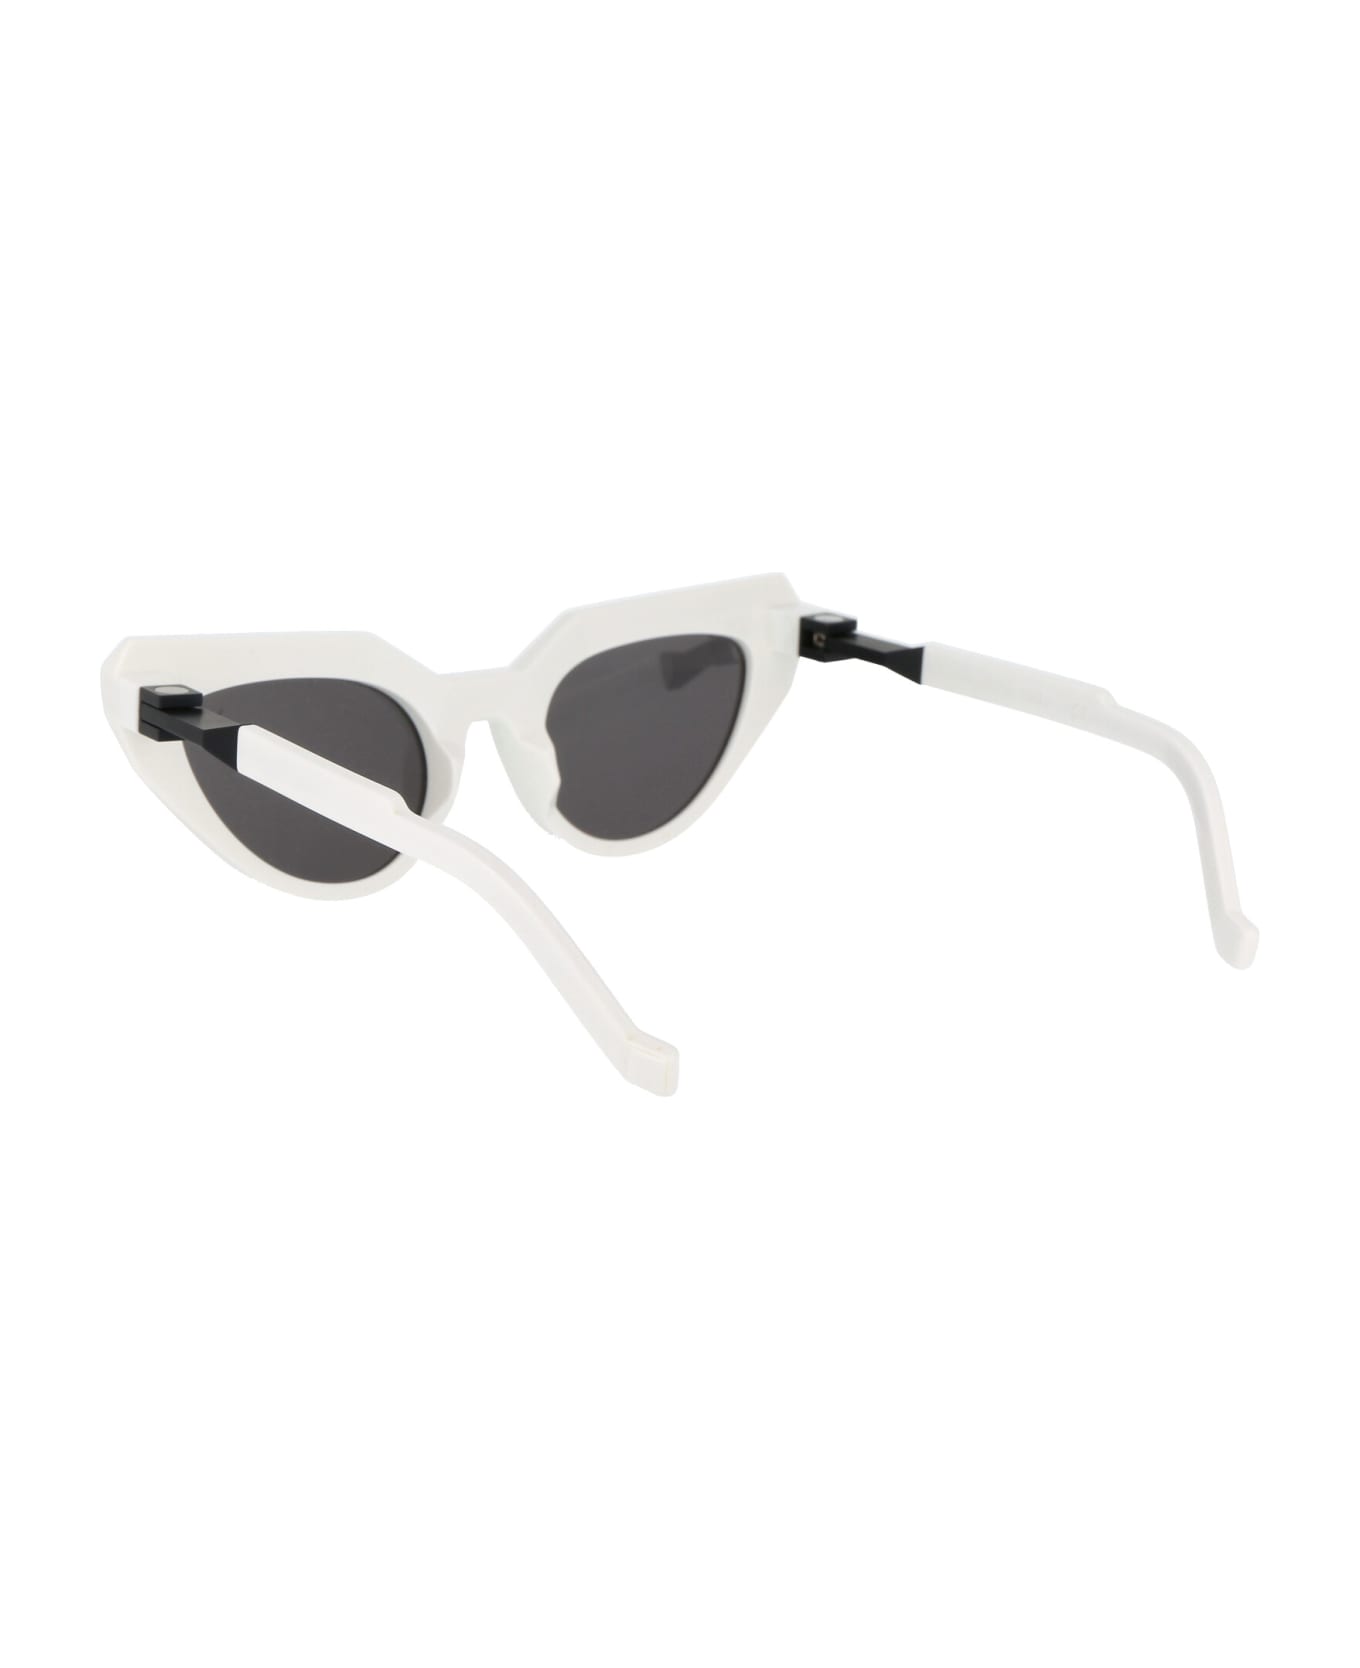 VAVA Bl0028 Sunglasses - WHITE|BLACK FLEX HINGES|BLACK LENSES